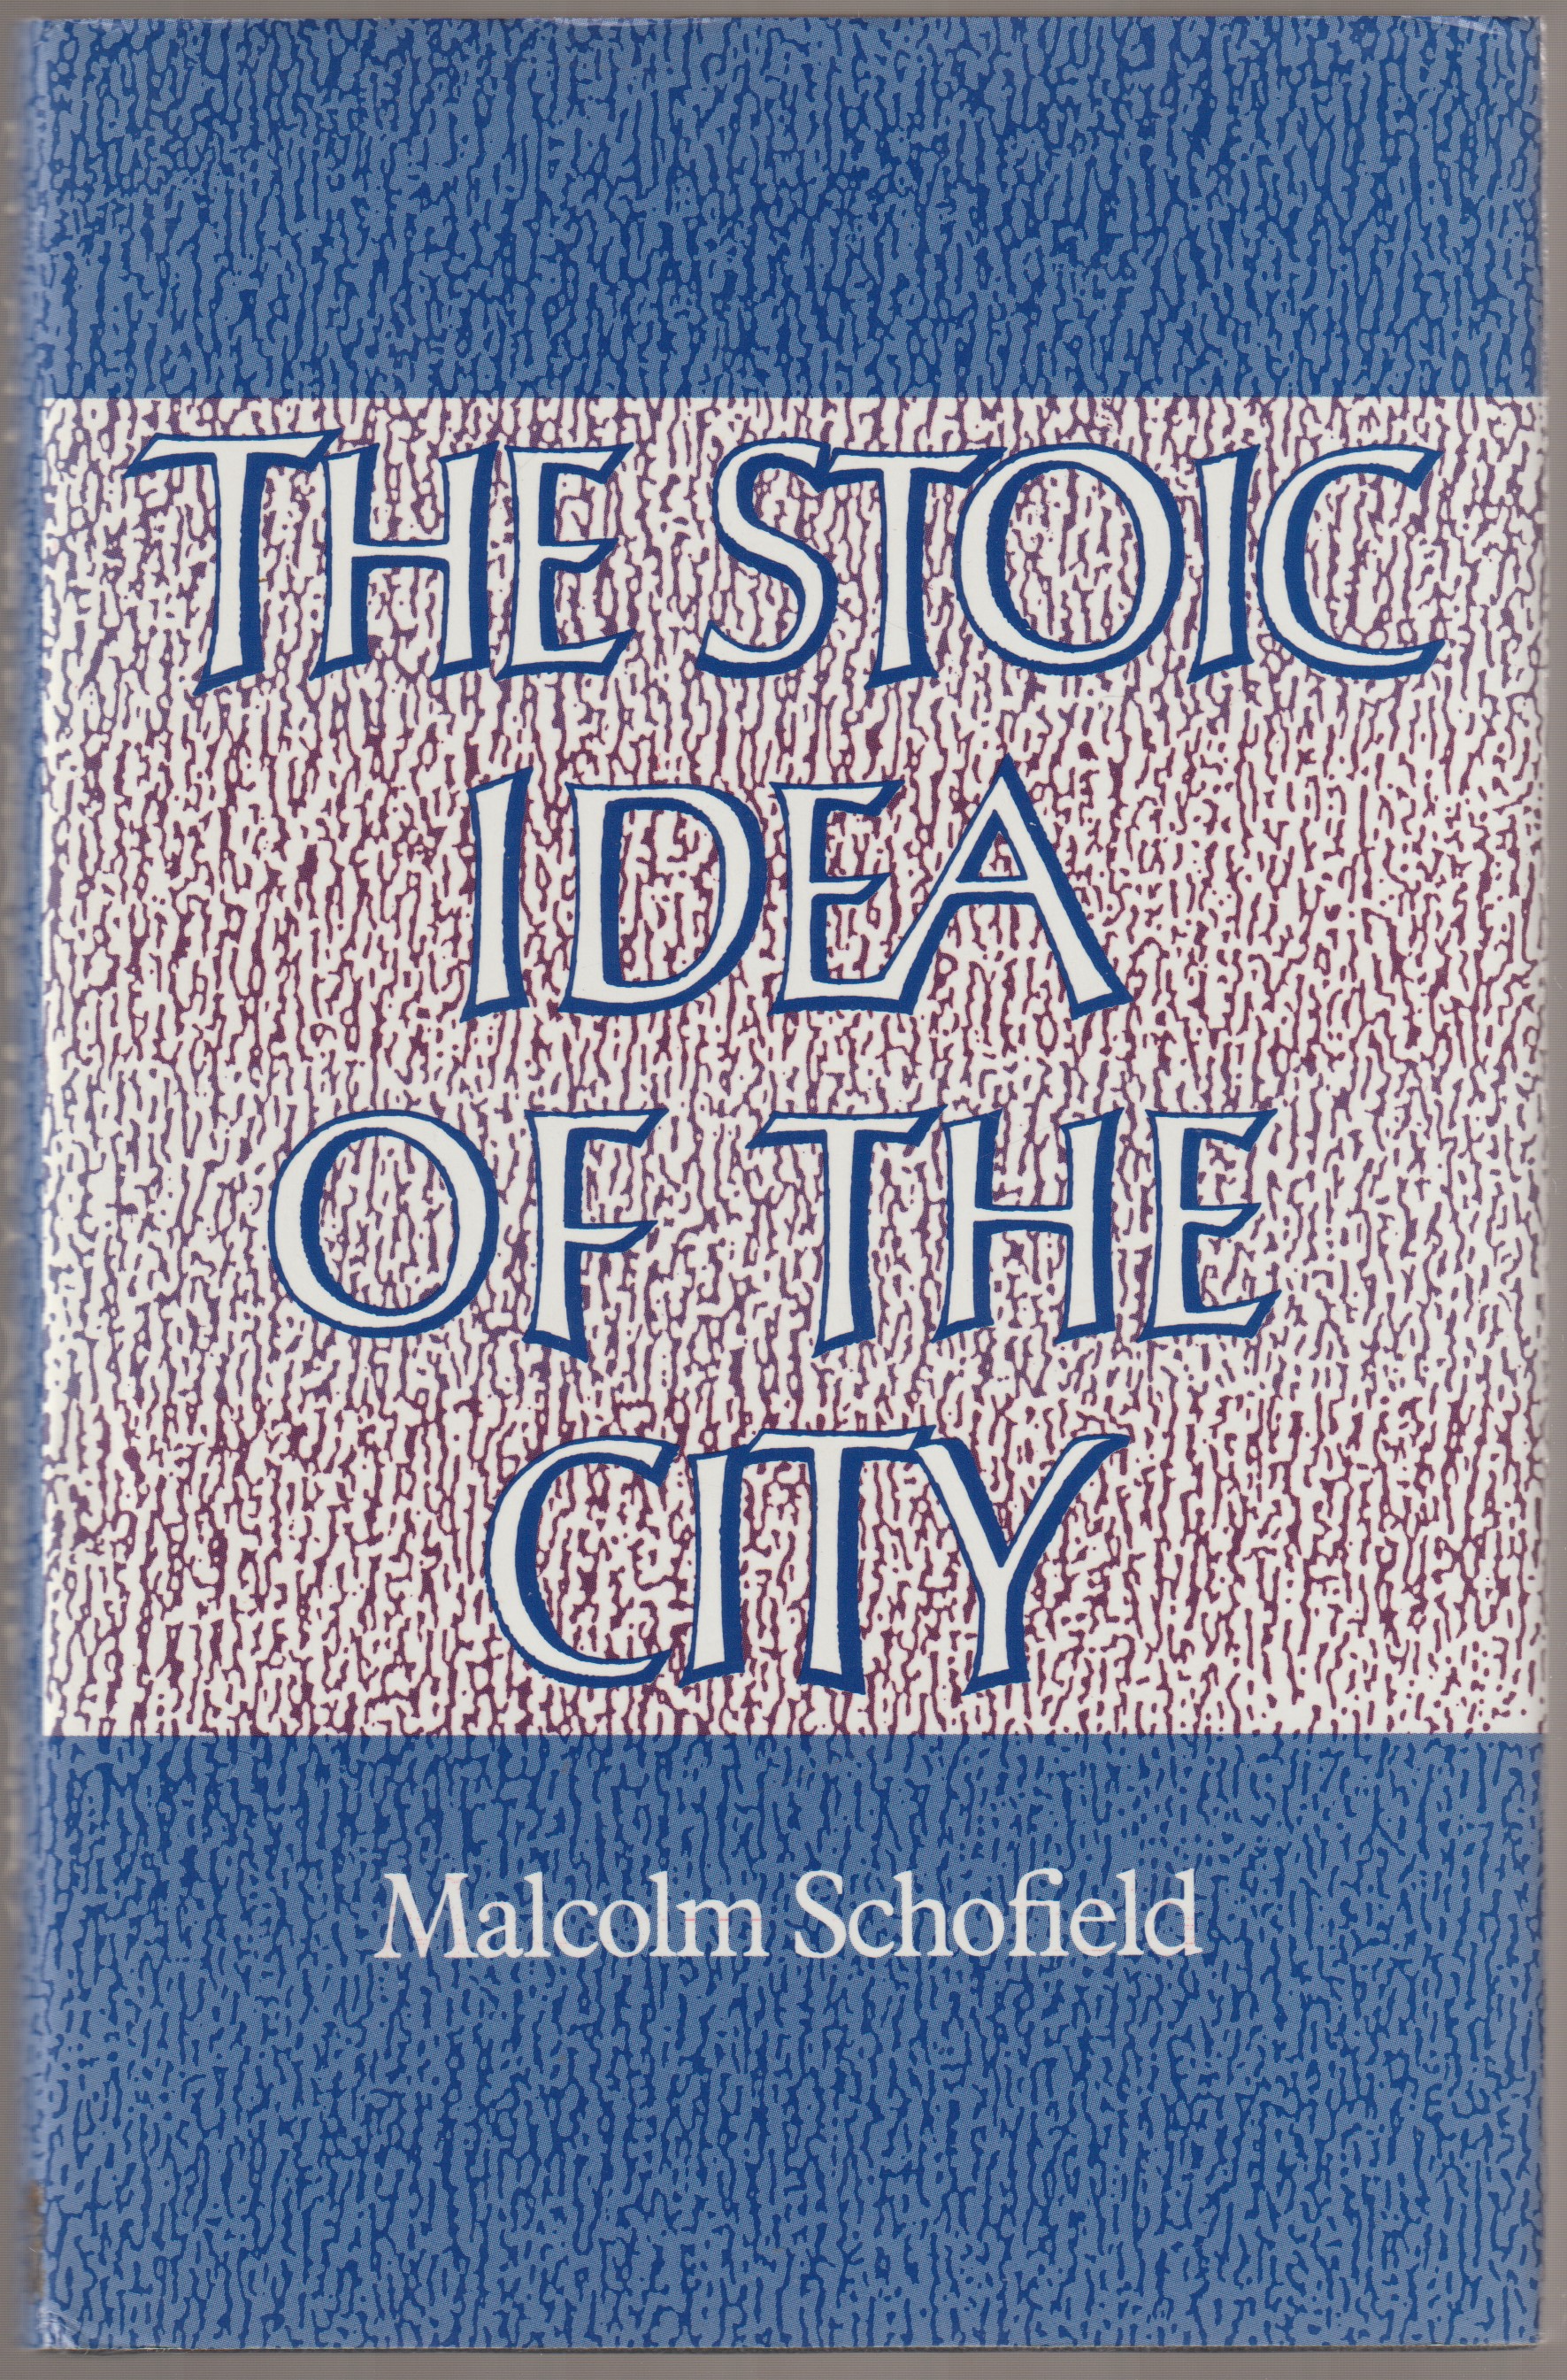 The Stoic idea of the city.